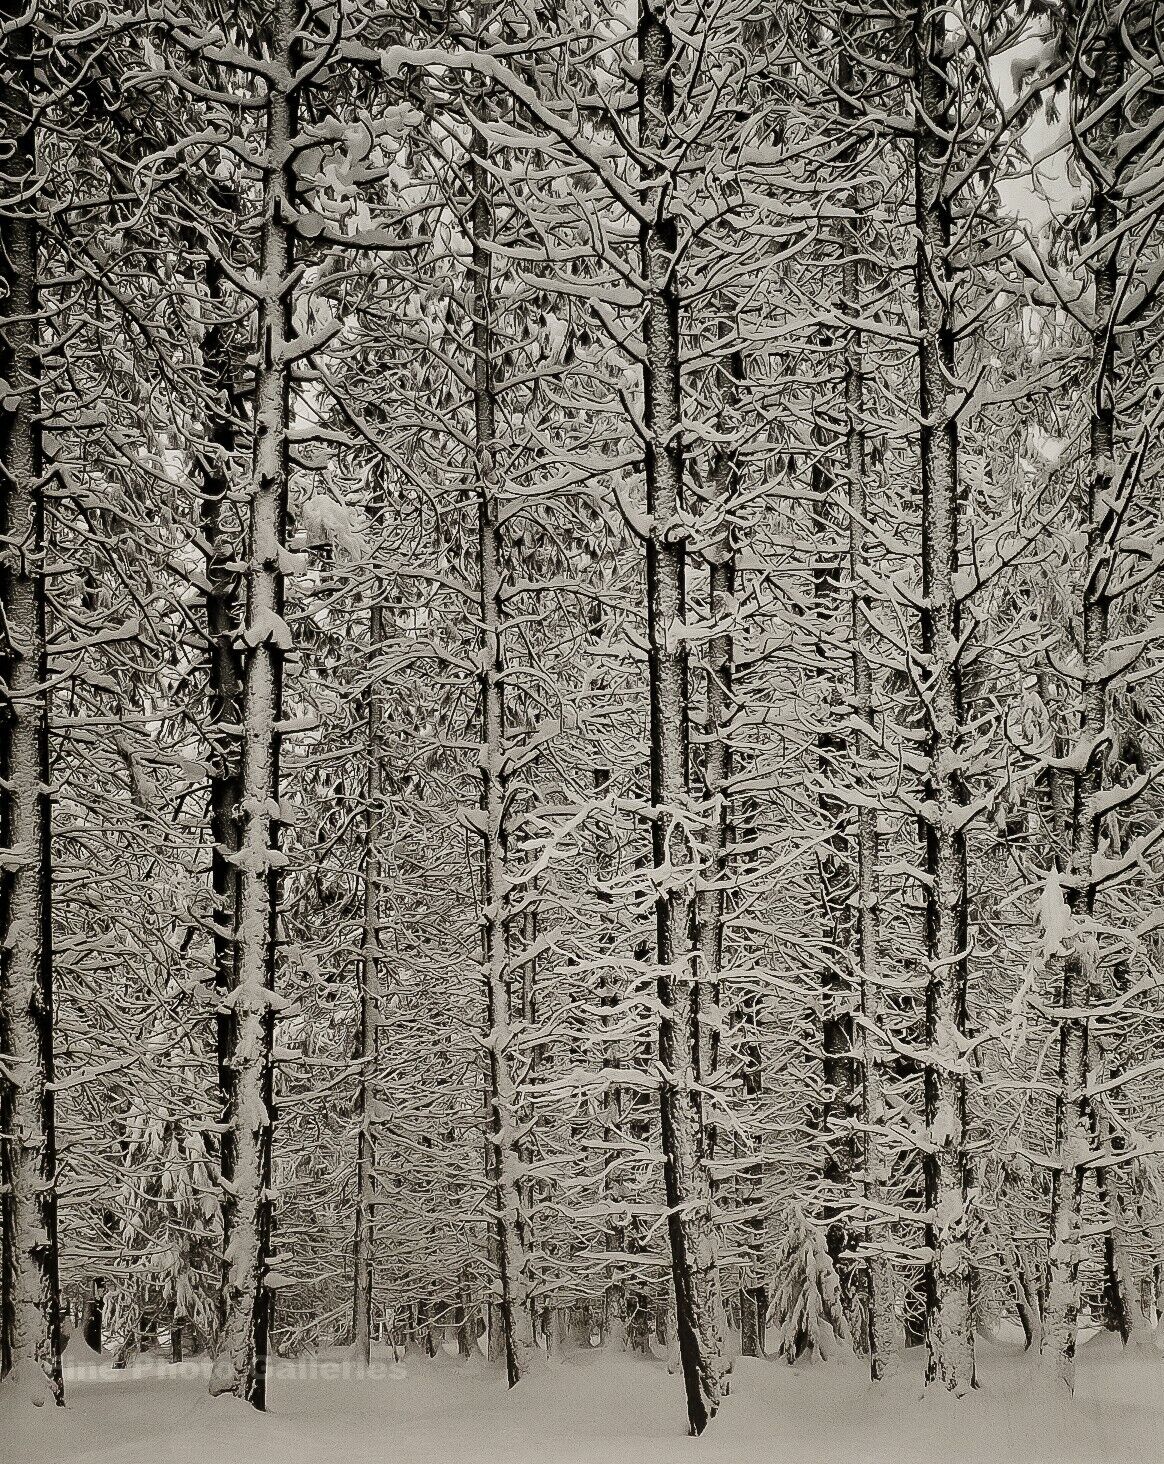 1933/72 ANSEL ADAMS Vintage Yosemite Pine Tree In Snow Landscape Photo Art 11X14